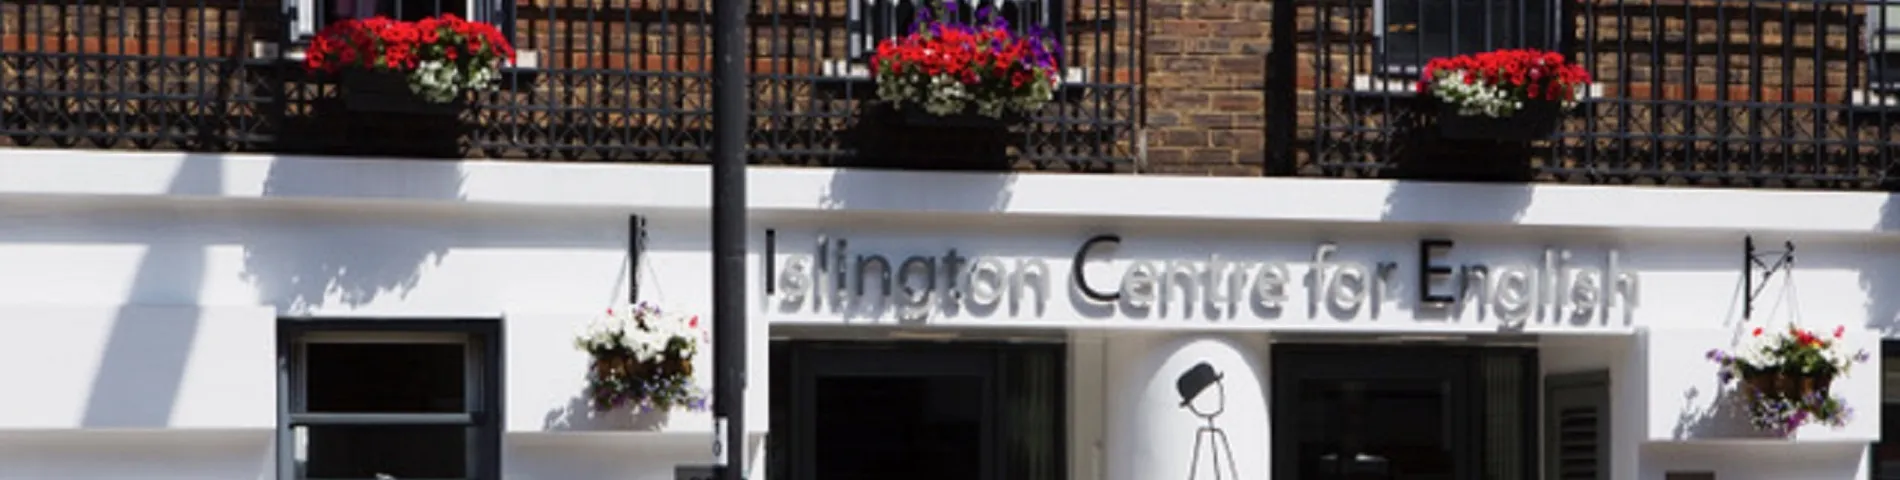 Islington Centre for English Bild 1